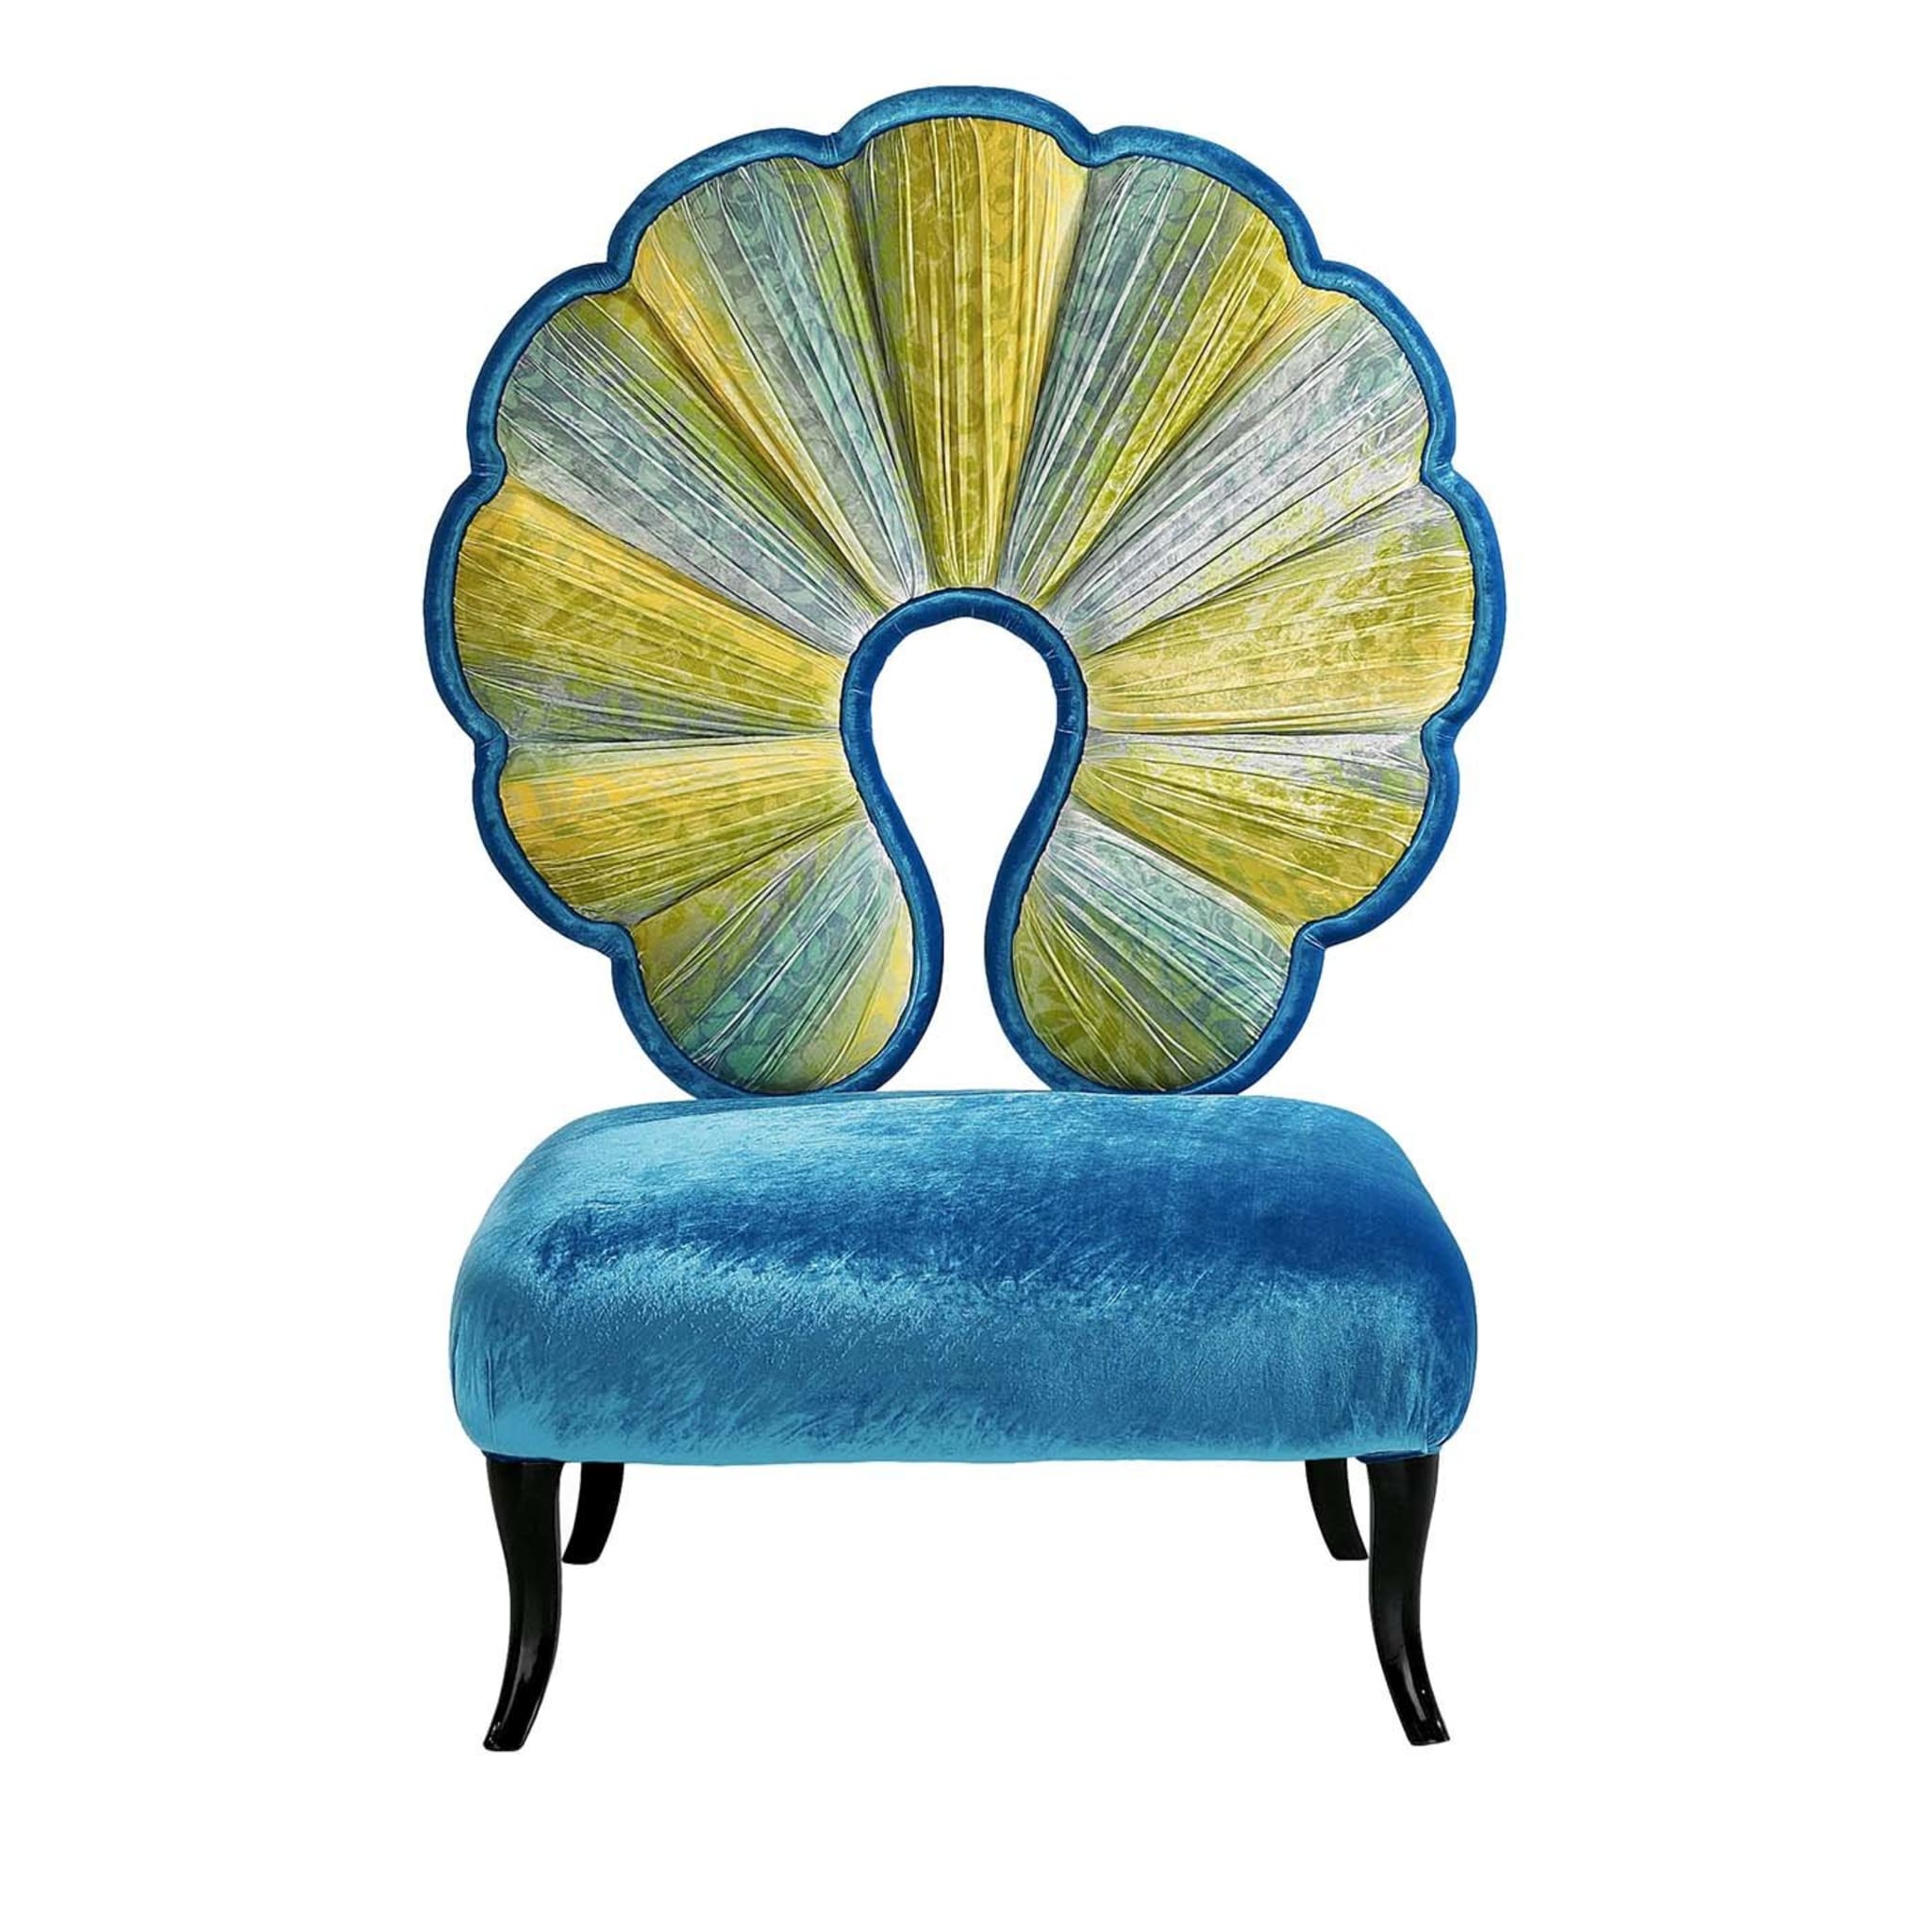 Lotus chair by Sicis Next Art - Main view